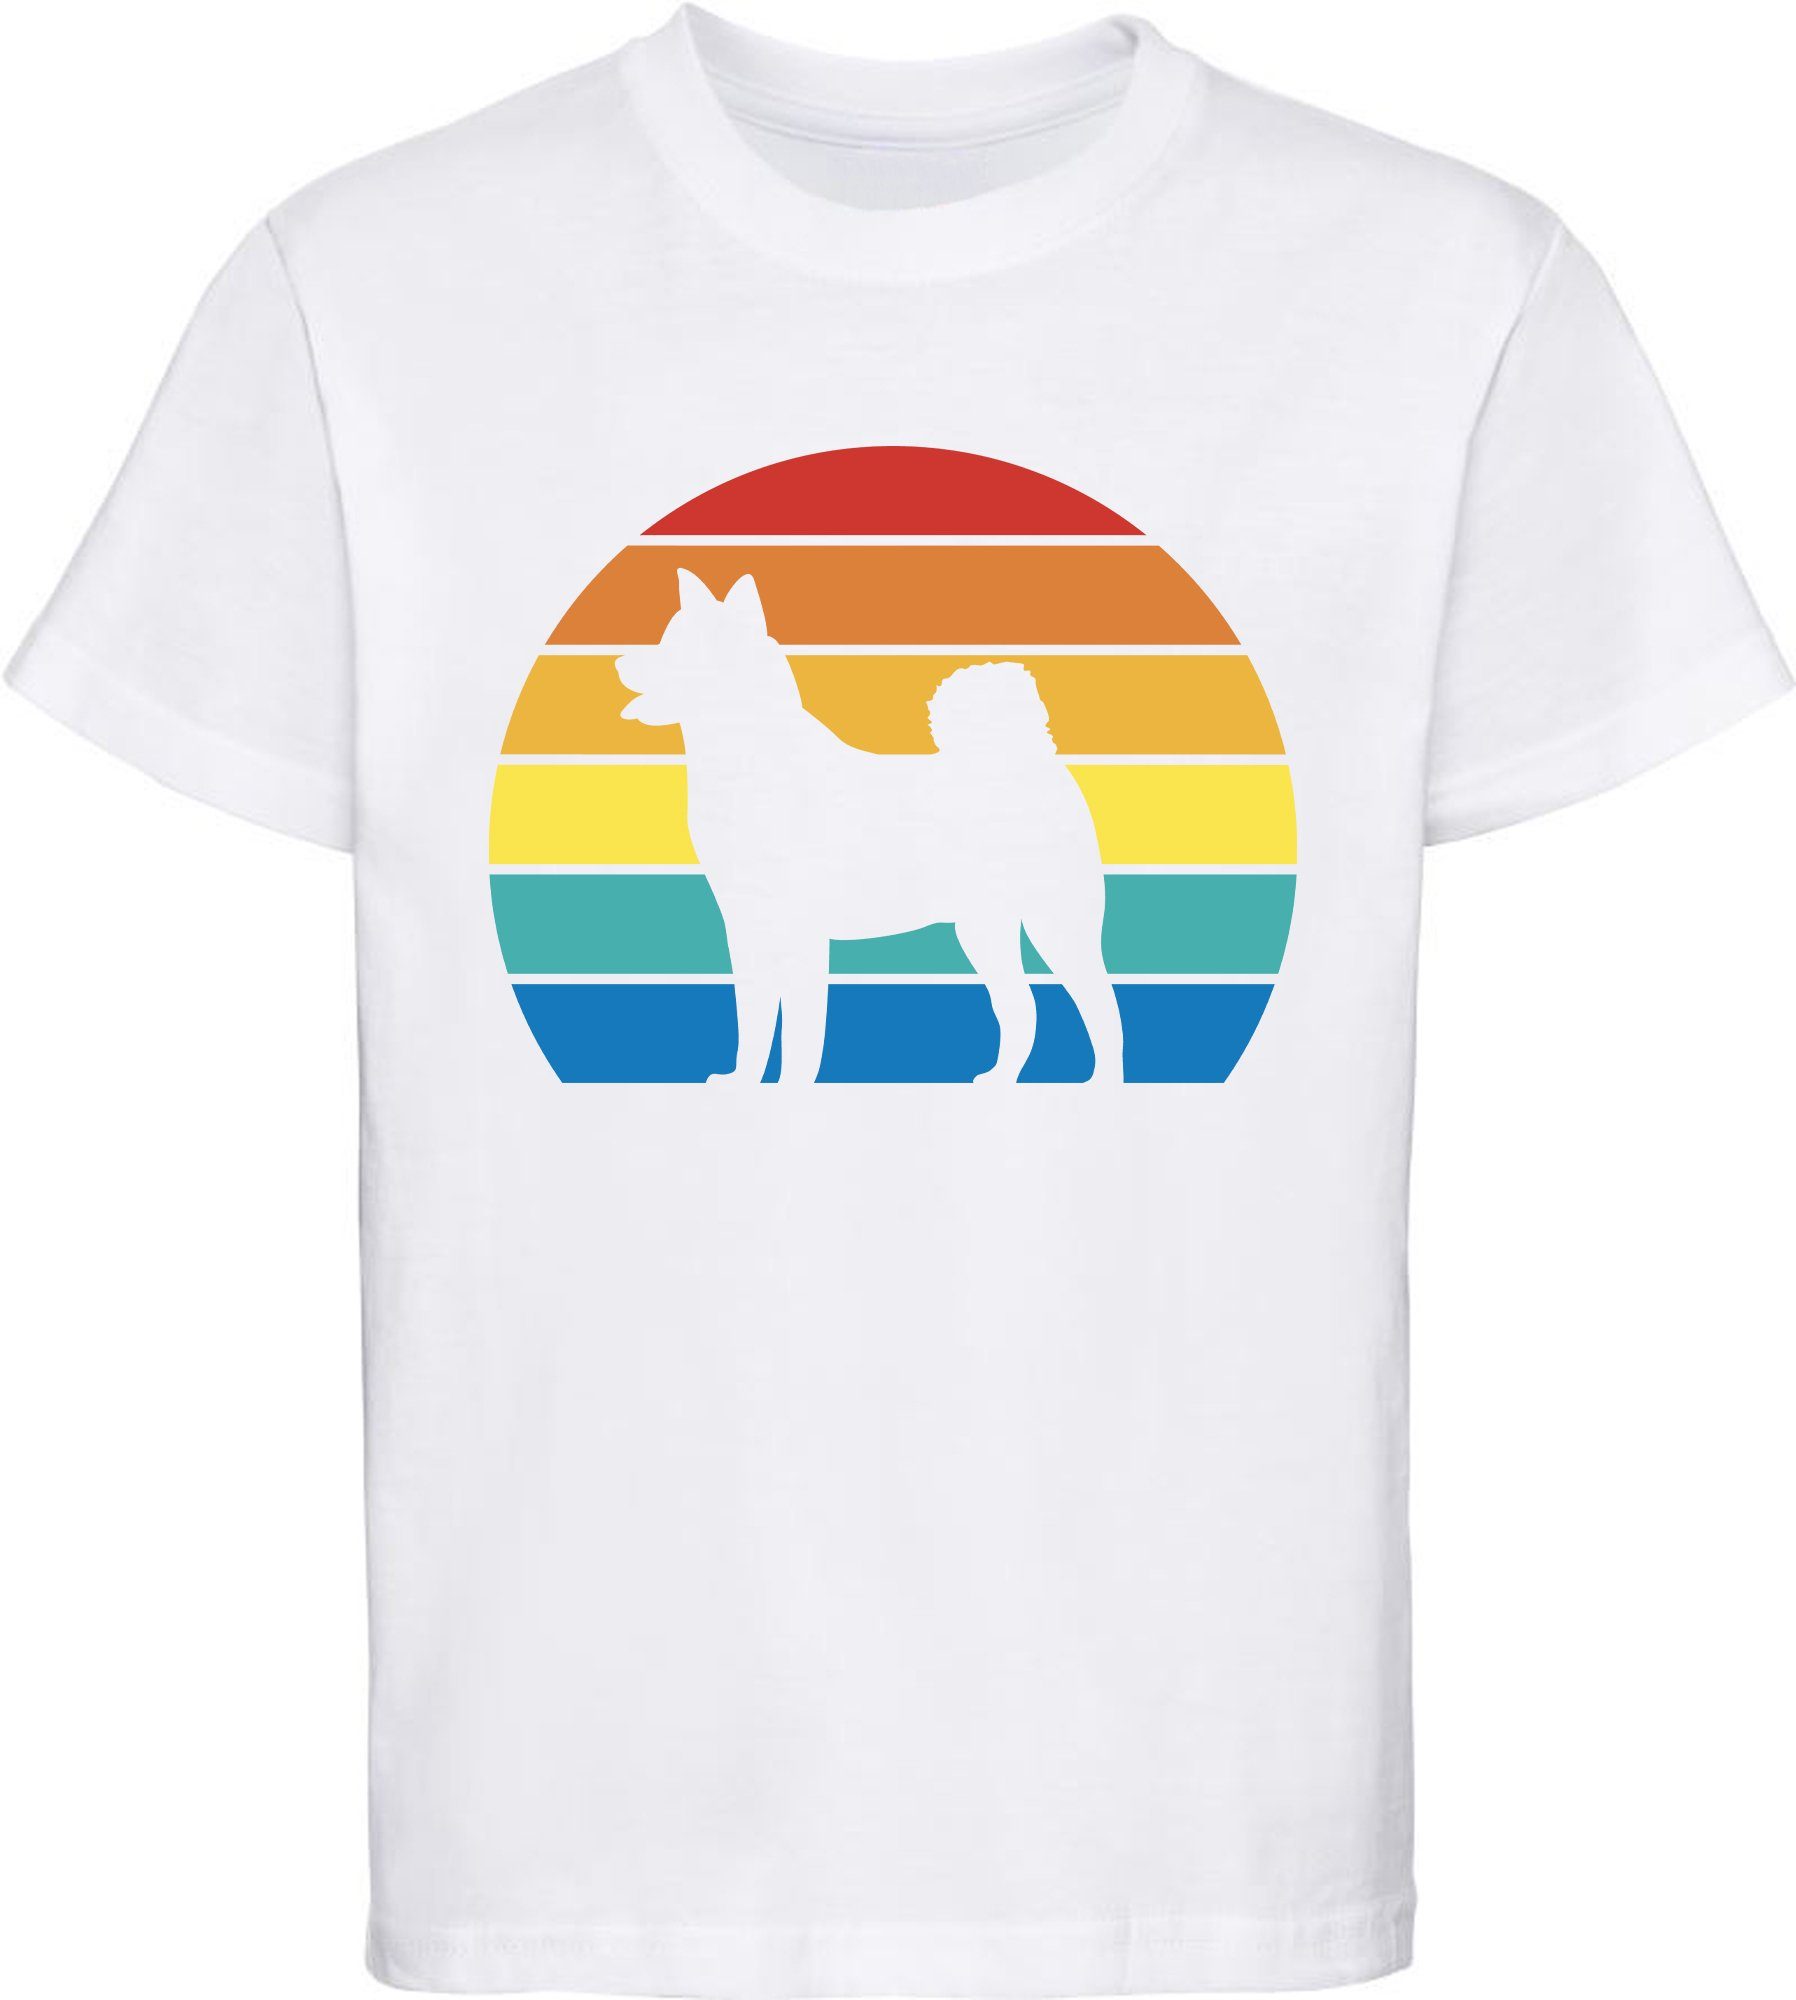 MyDesign24 Print-Shirt Kinder Hunde T-Shirt bedruckt - Retro Akita Bild Baumwollshirt mit Aufdruck, i236 weiss